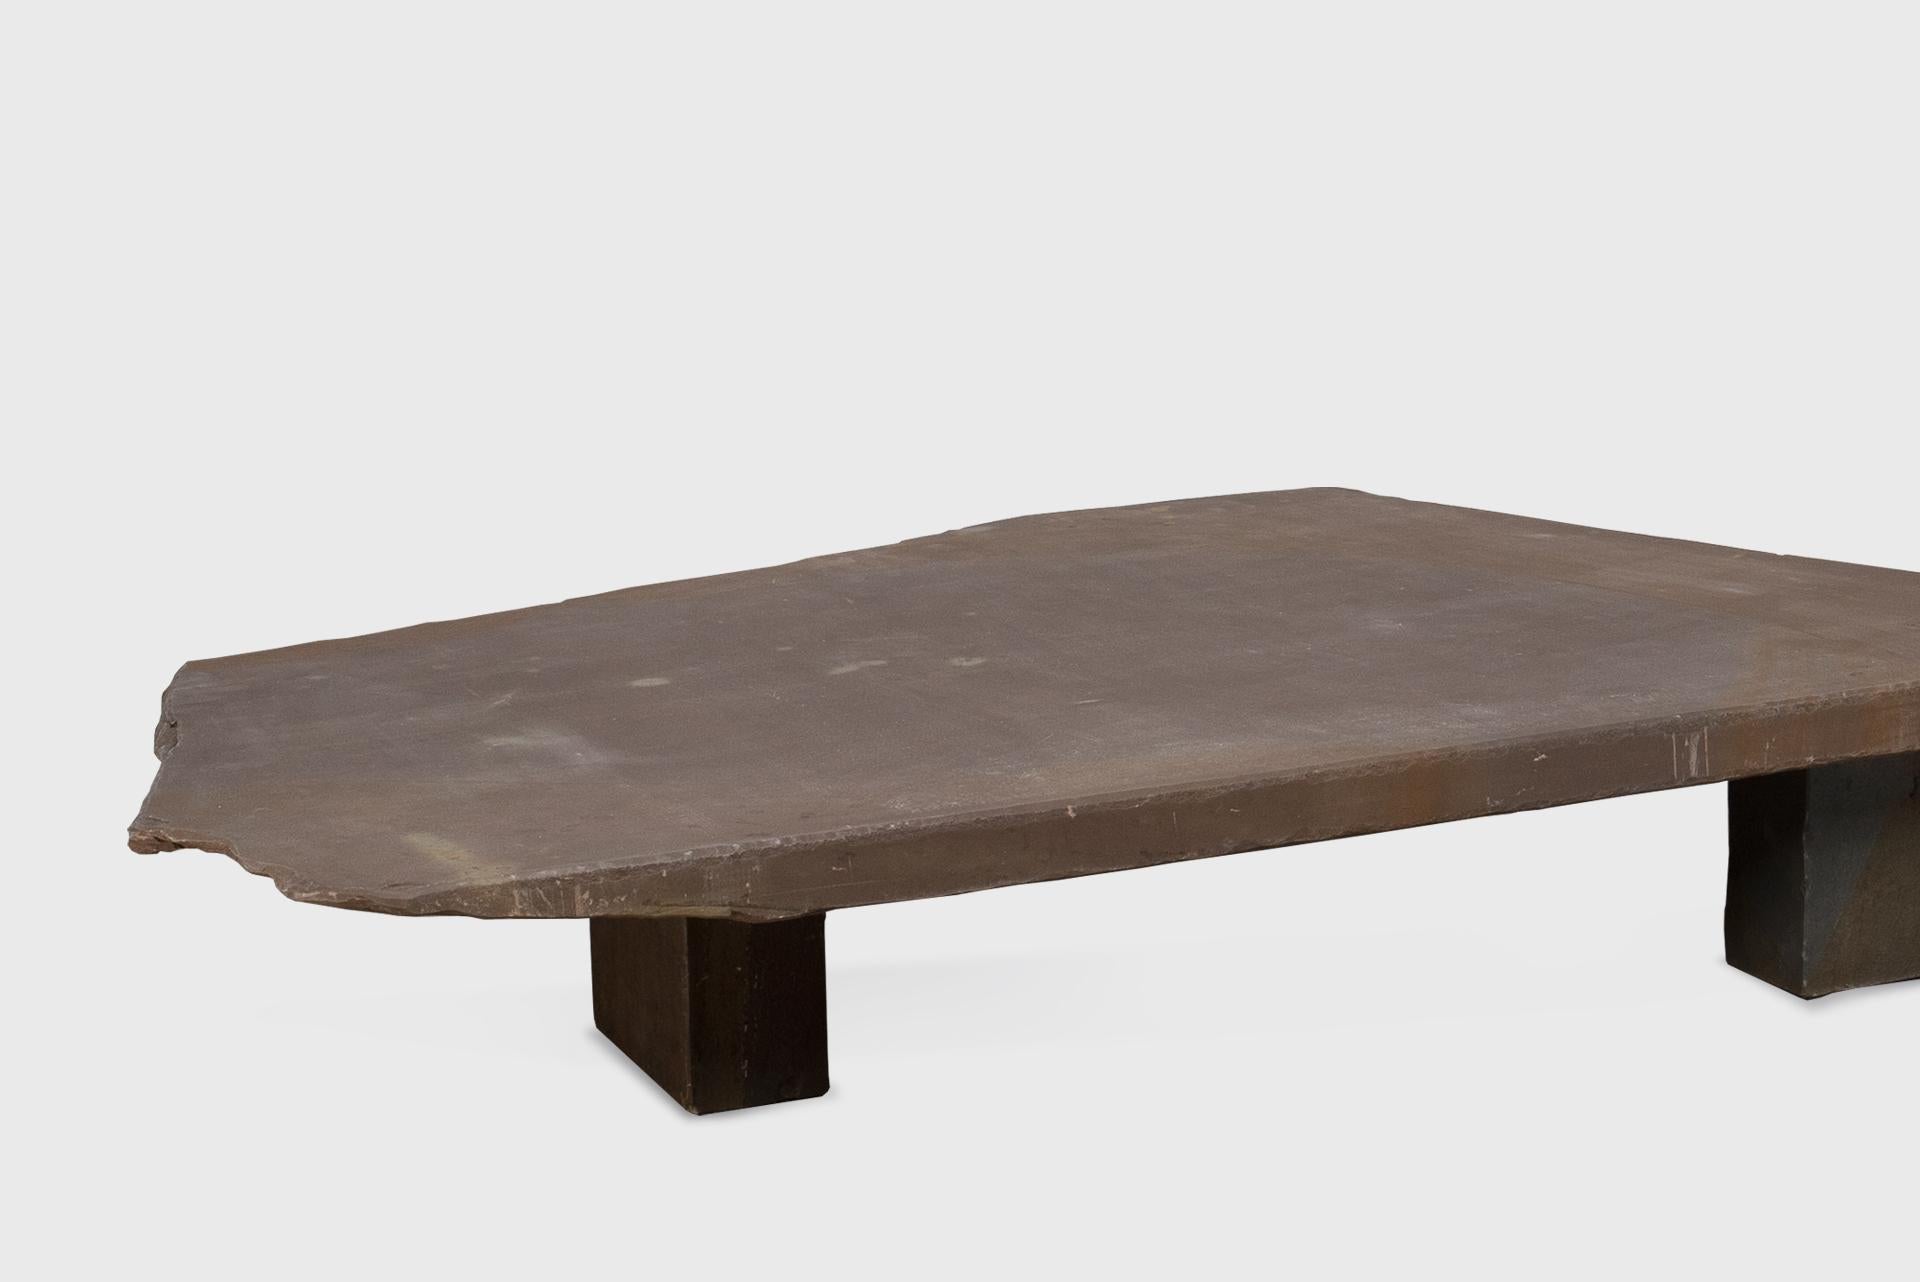 Pierre Table basse contemporaine en pierre naturelle 03, Graywacke Offcut, Carsten inder Elst en vente